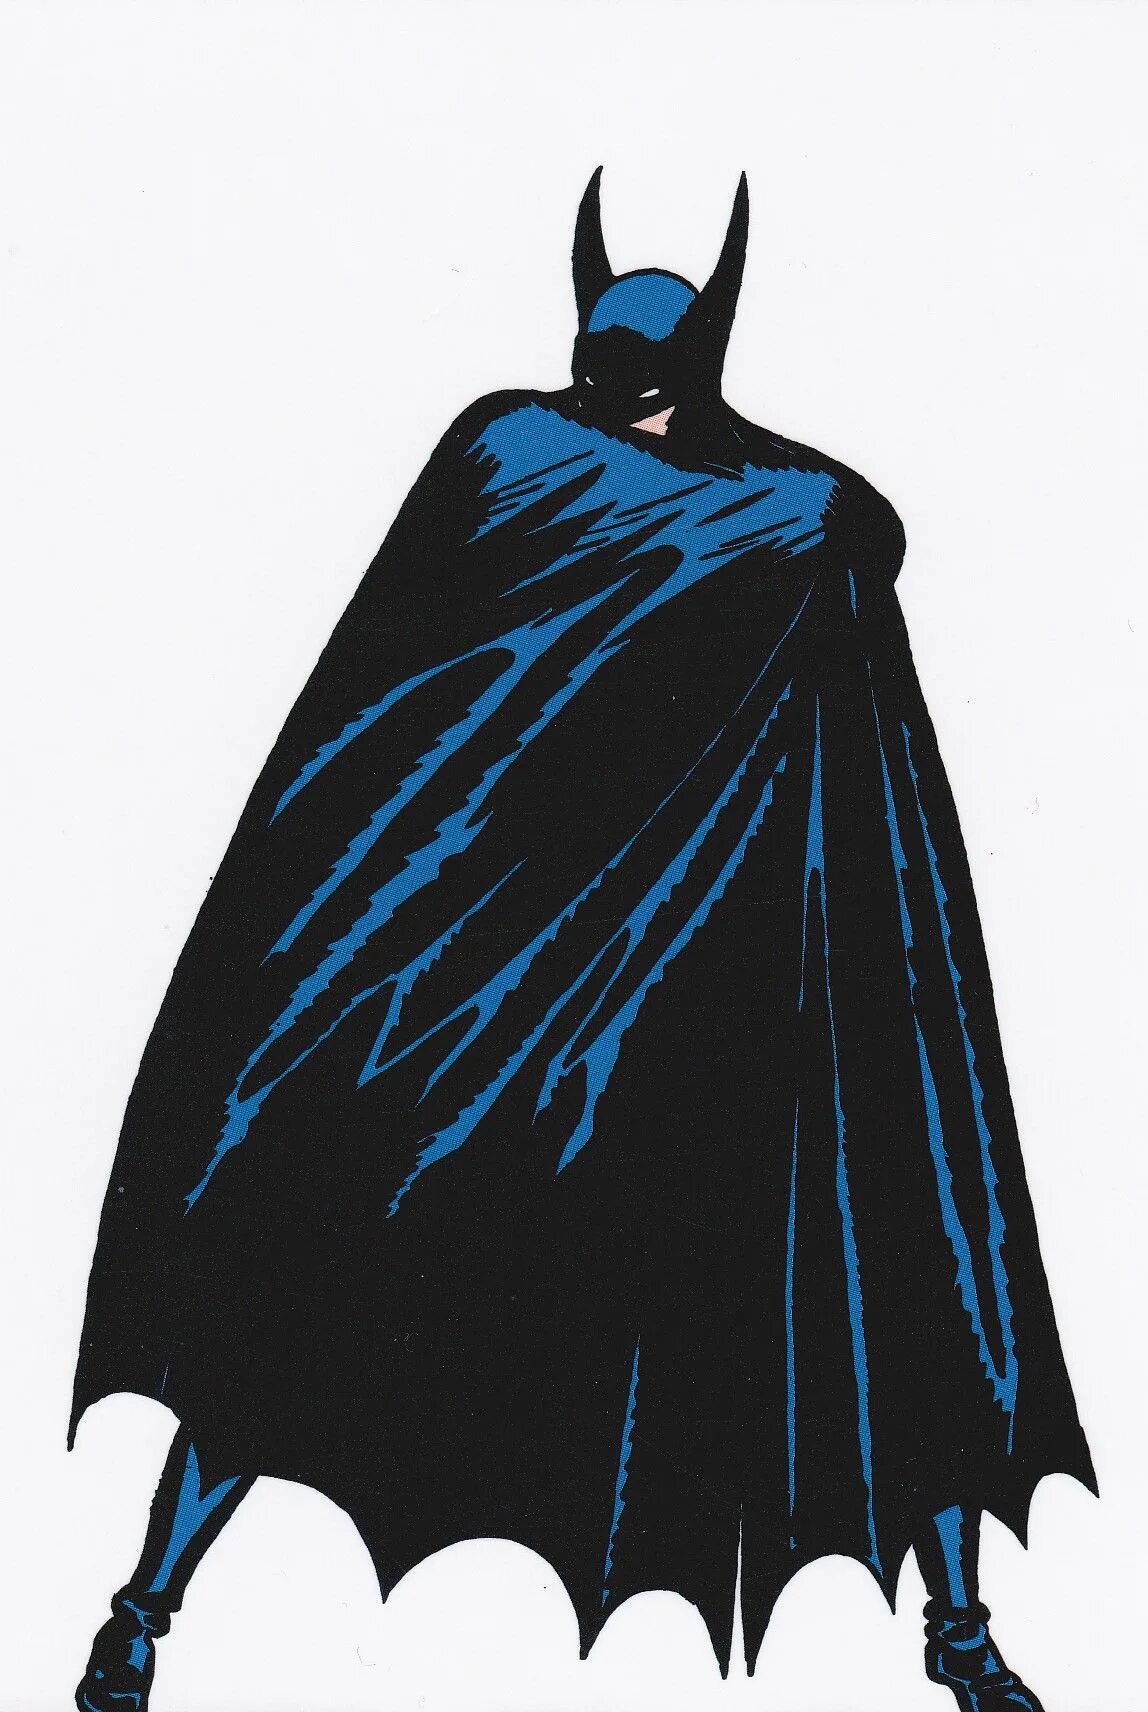 Batman плащ. Плащ Бэтмена. Бэтмен комикс. Плащ супергероя Бэтмена. Batman cape